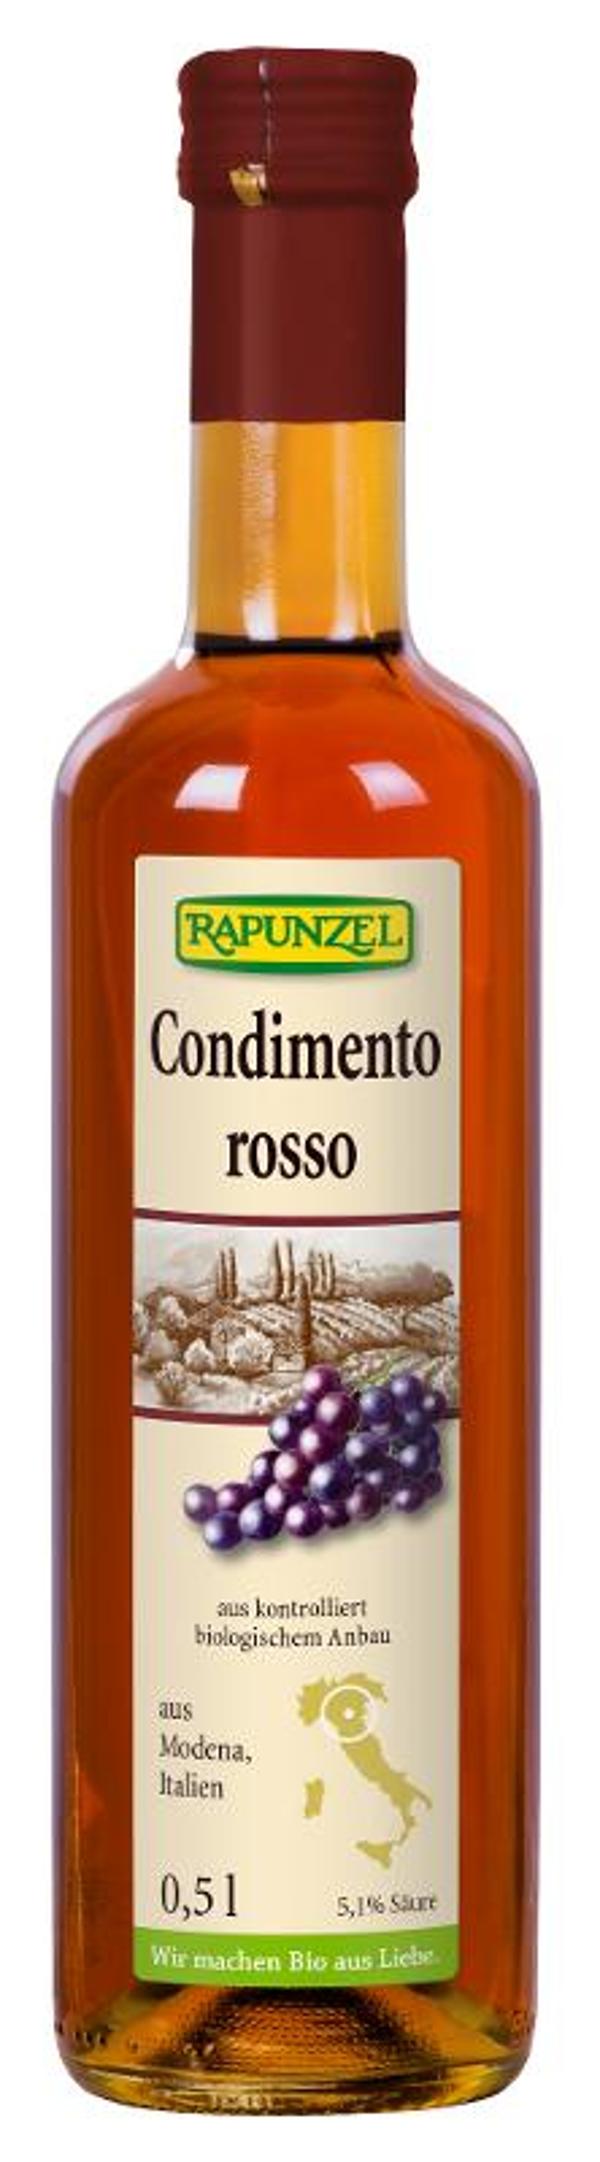 Produktfoto zu Condimento Rosso Rapunzel